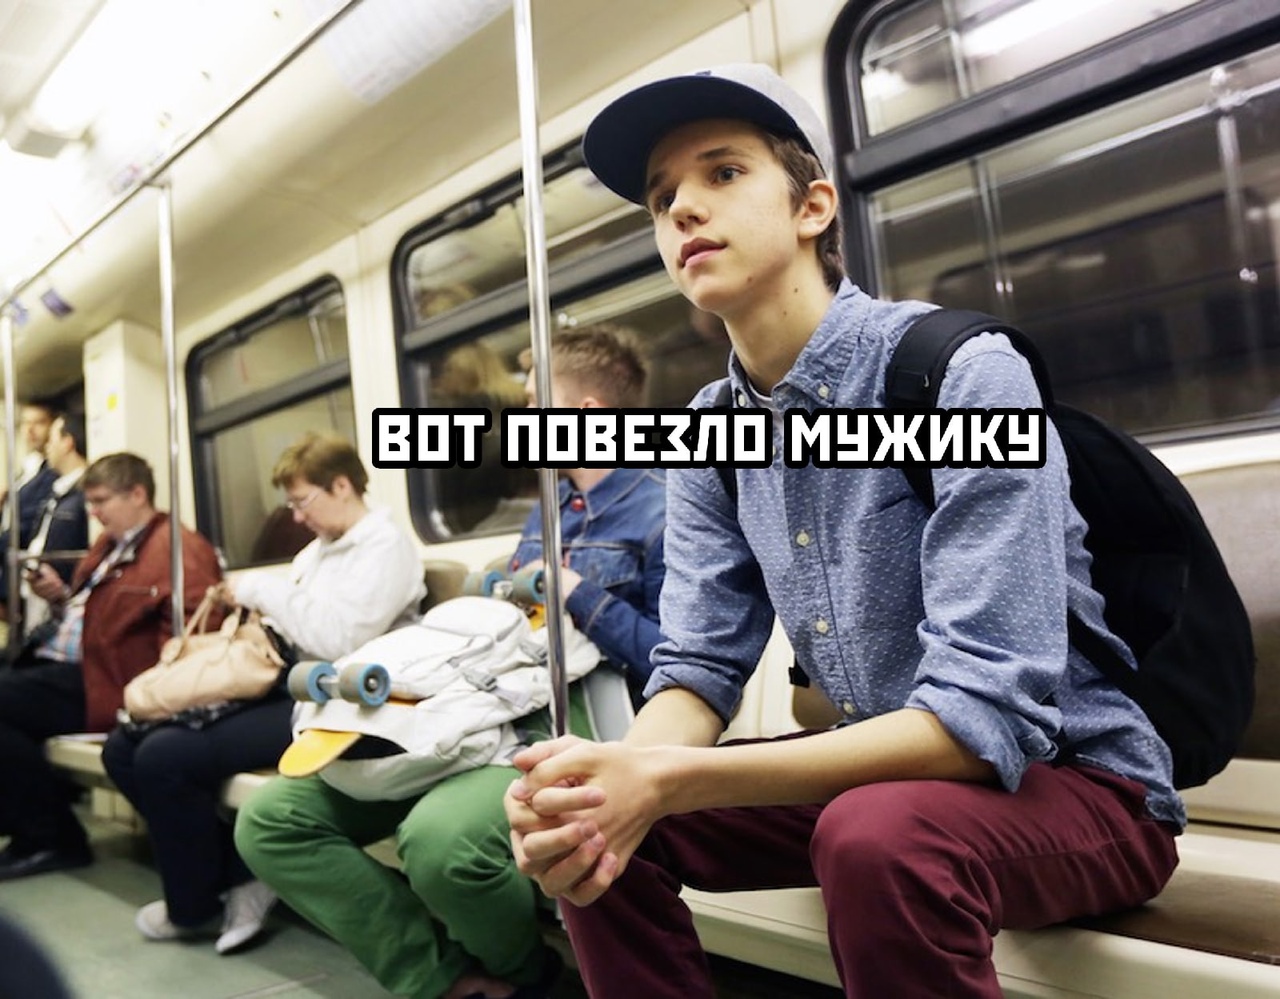 Москва едет на работу. Люди в метро. Ехать на метро. Люди едут в метро. Человек сидит в метро.